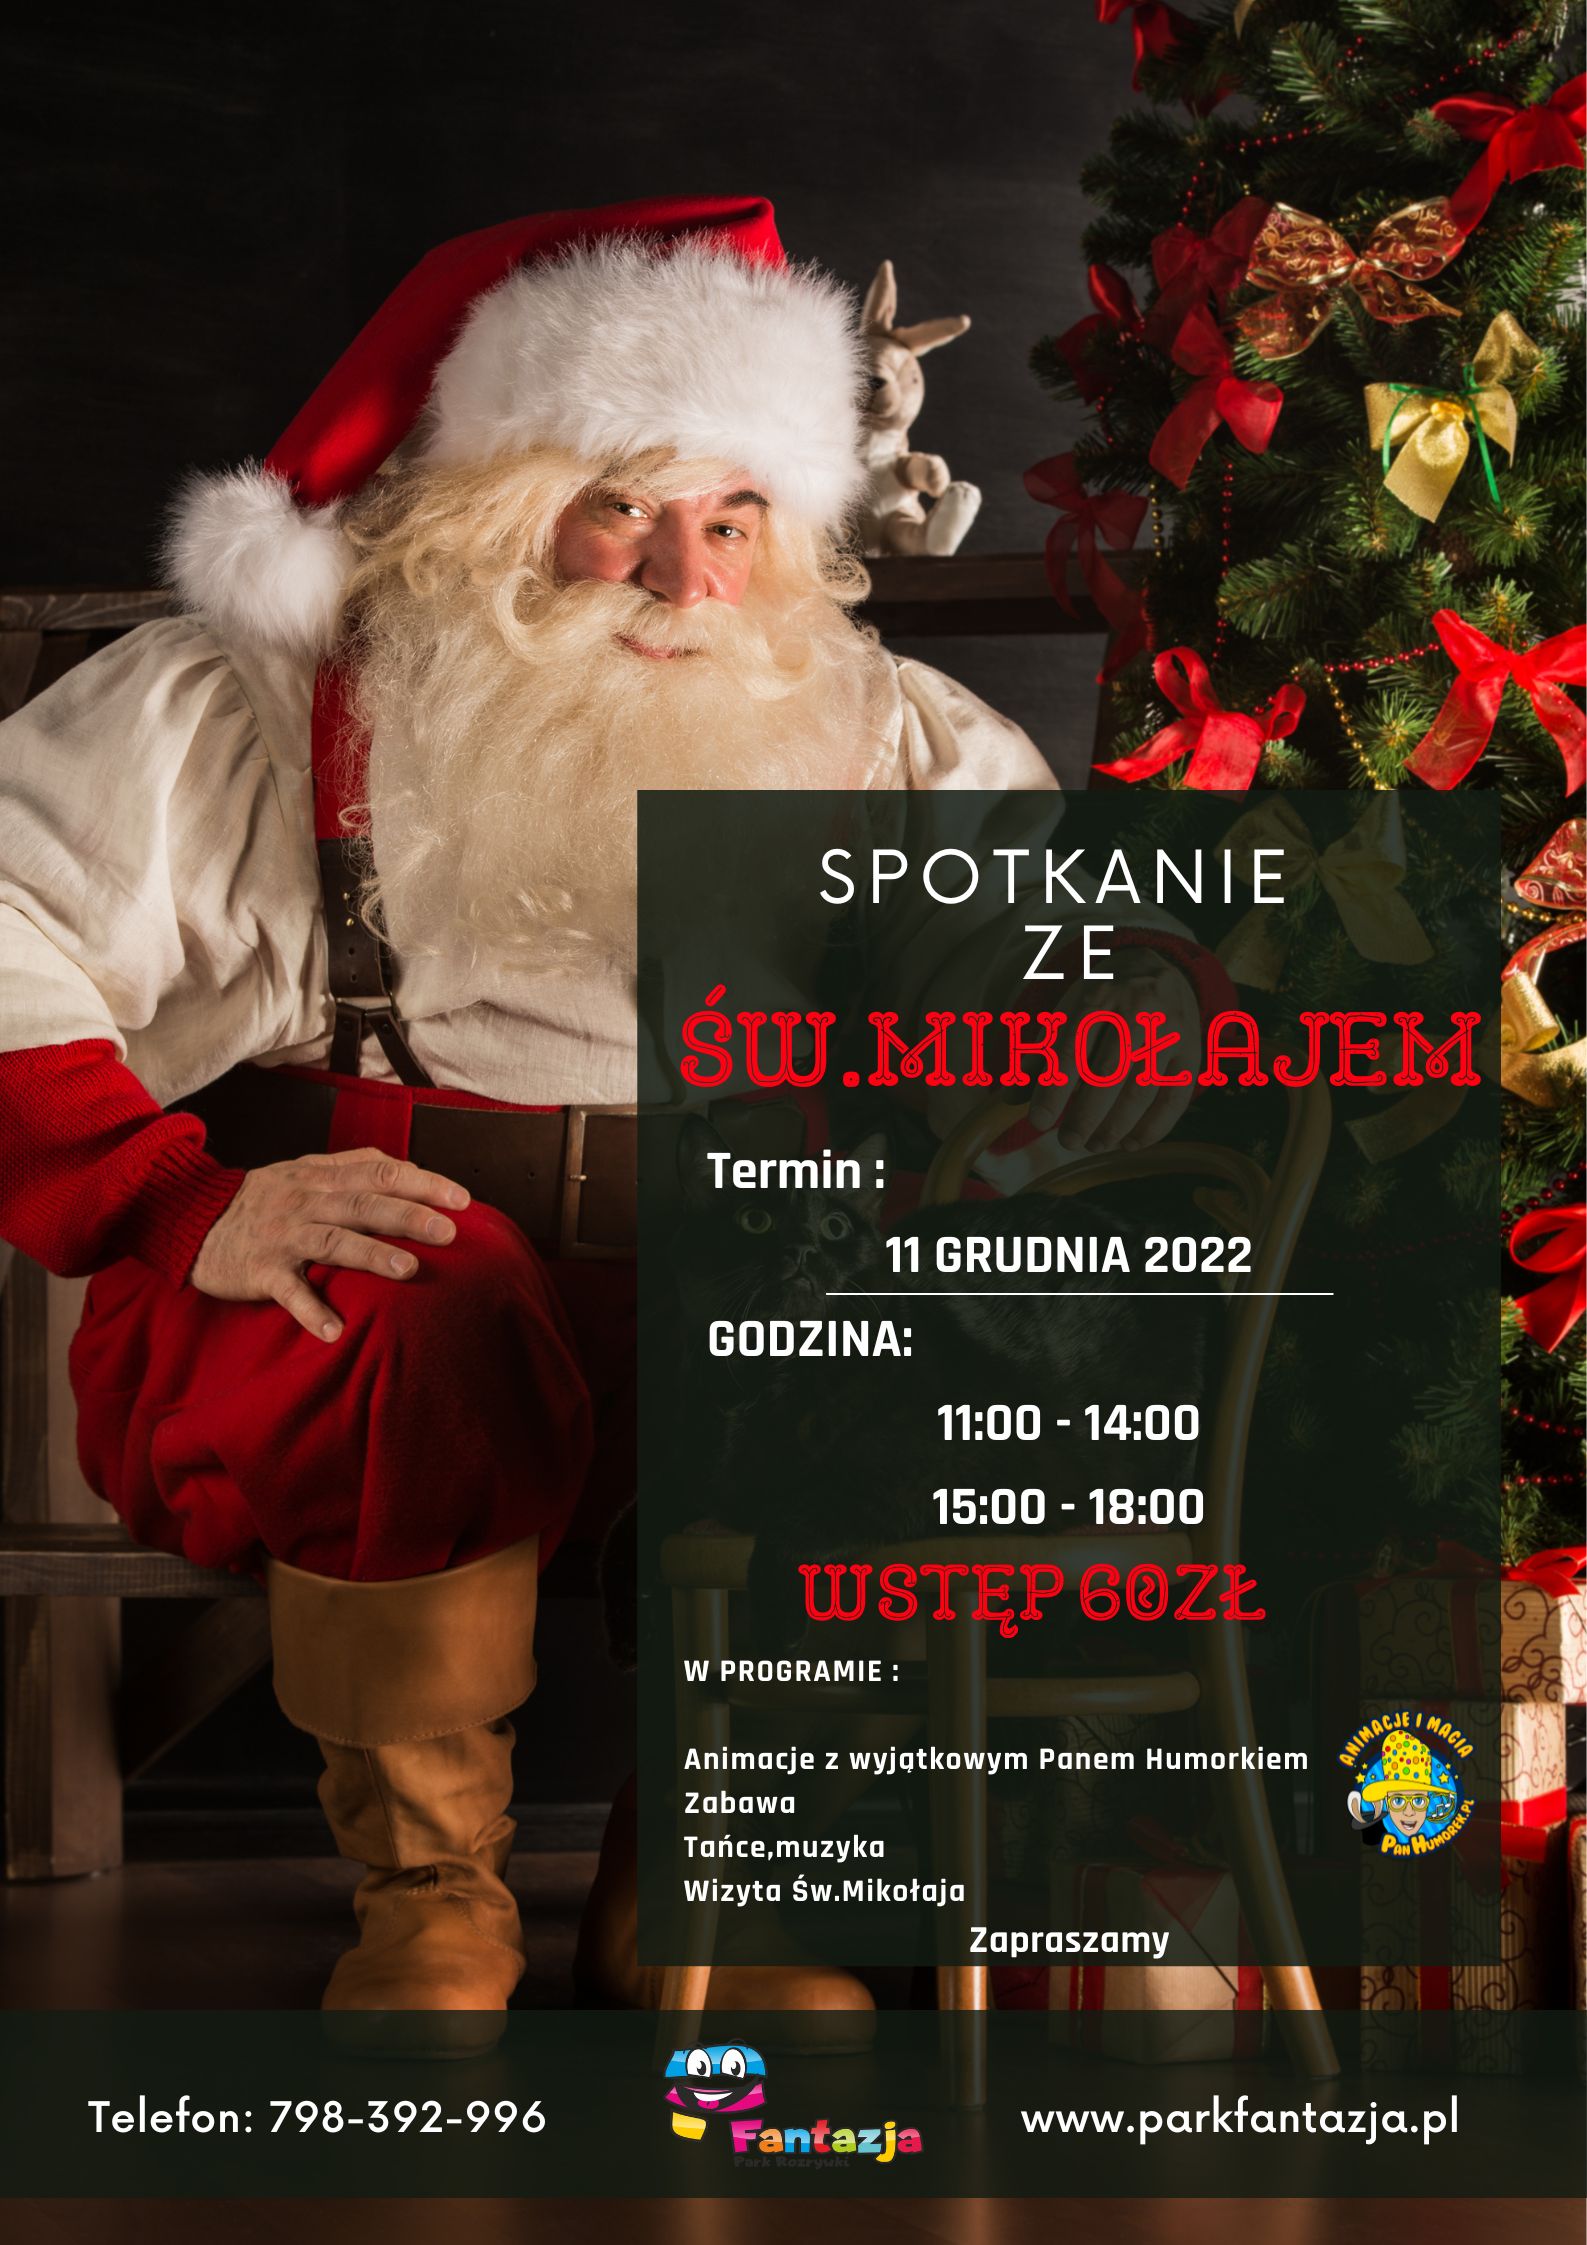 Red_Green_Modern_Photo_Meet_Santa_Holiday_Photography_Event_Poster-3.jpg